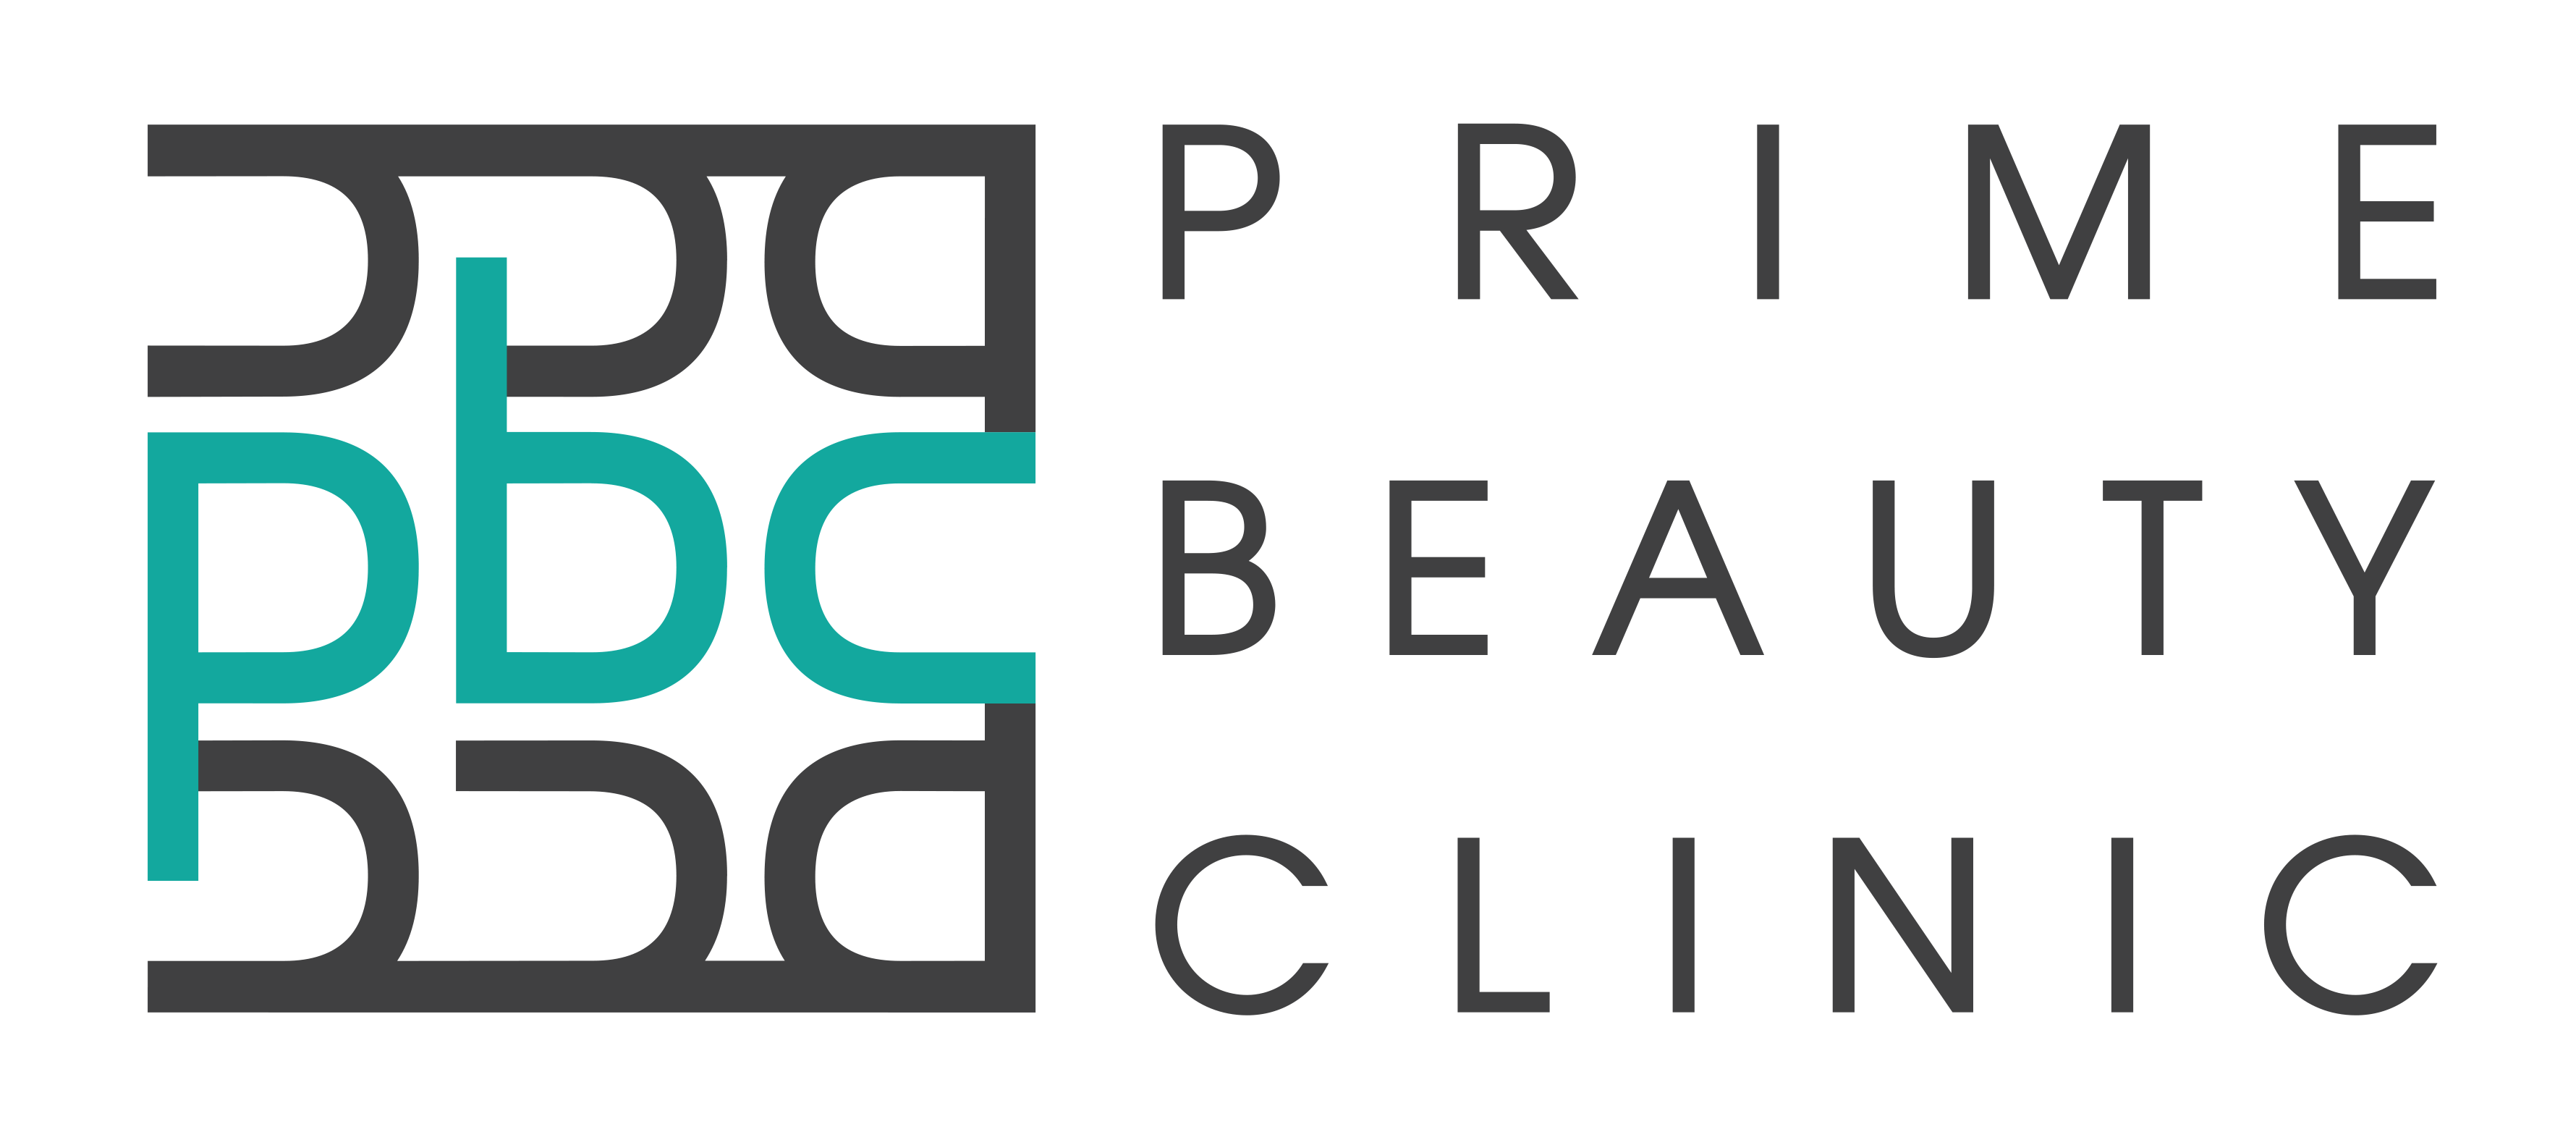 Prime Beauty Clinic - центр косметологии и красоты